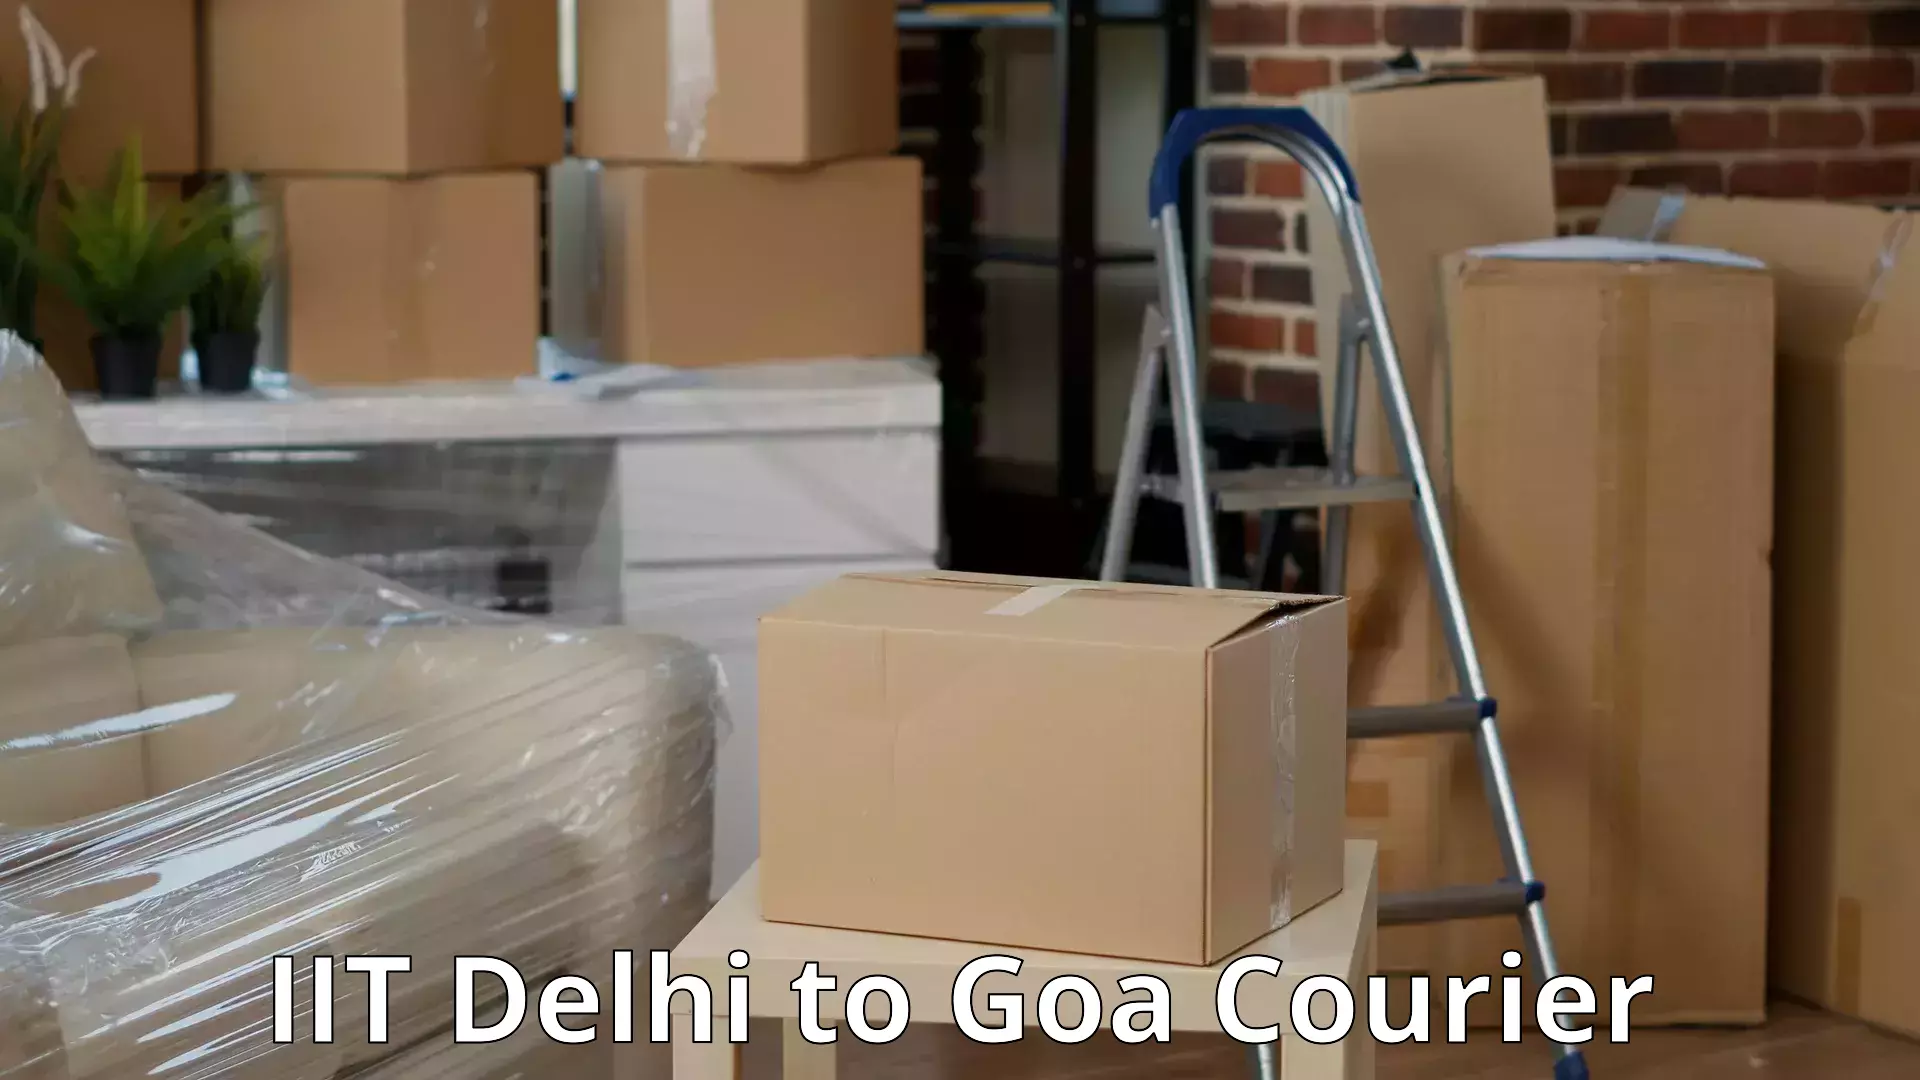 Professional moving assistance IIT Delhi to IIT Goa